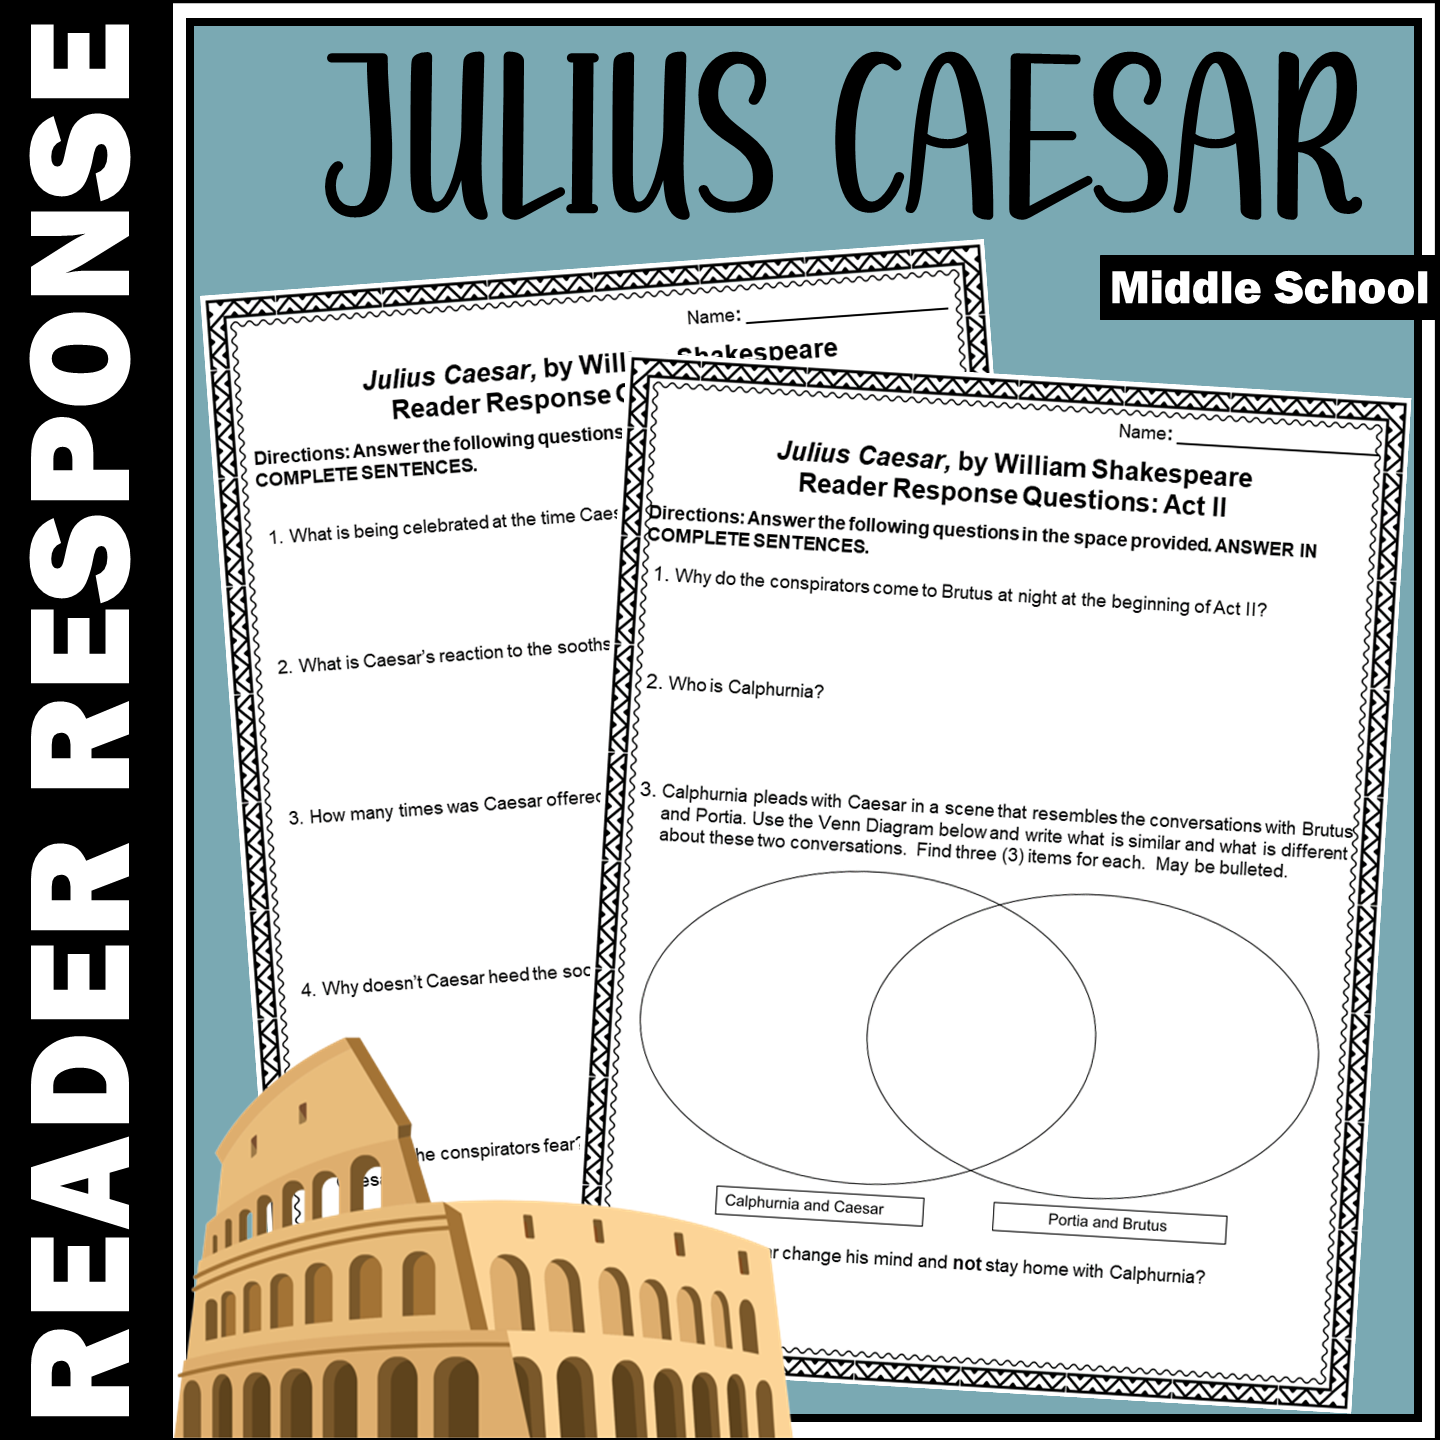 Julius Caesar - Reader Response Questions - All Acts